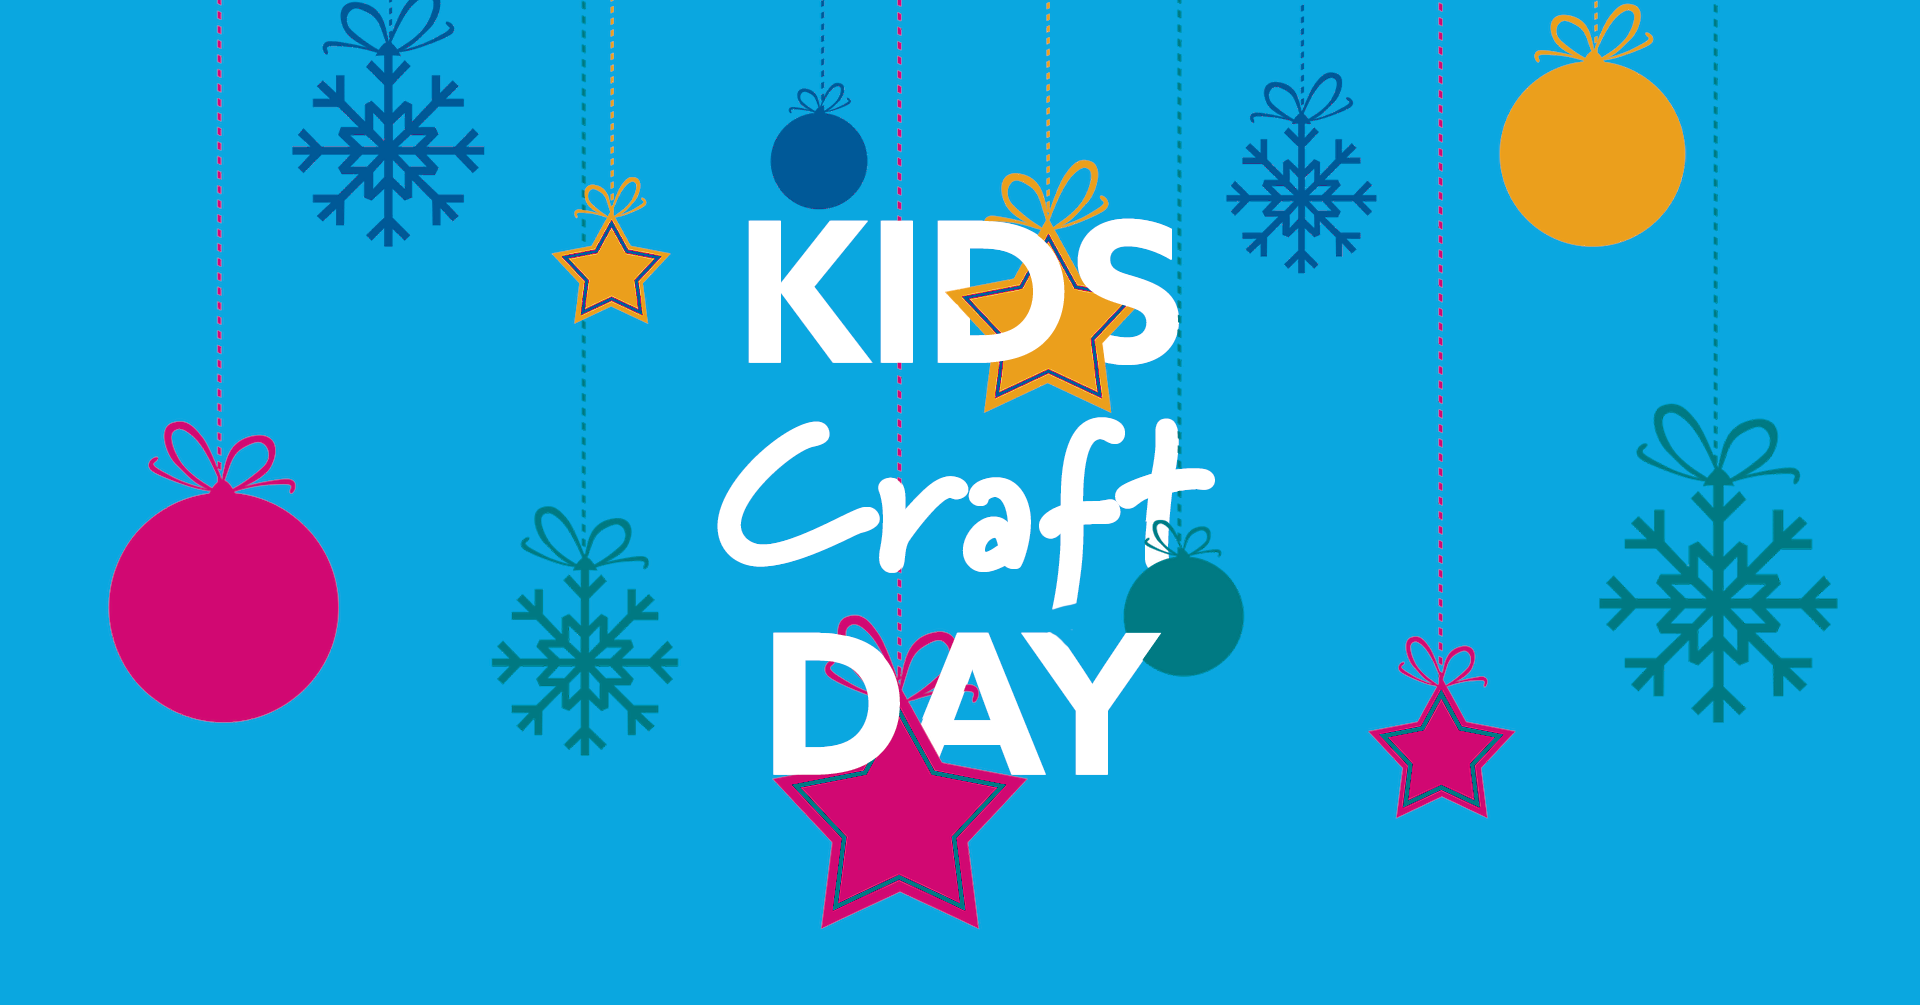 Kid's Craft Day Thompson December 10th